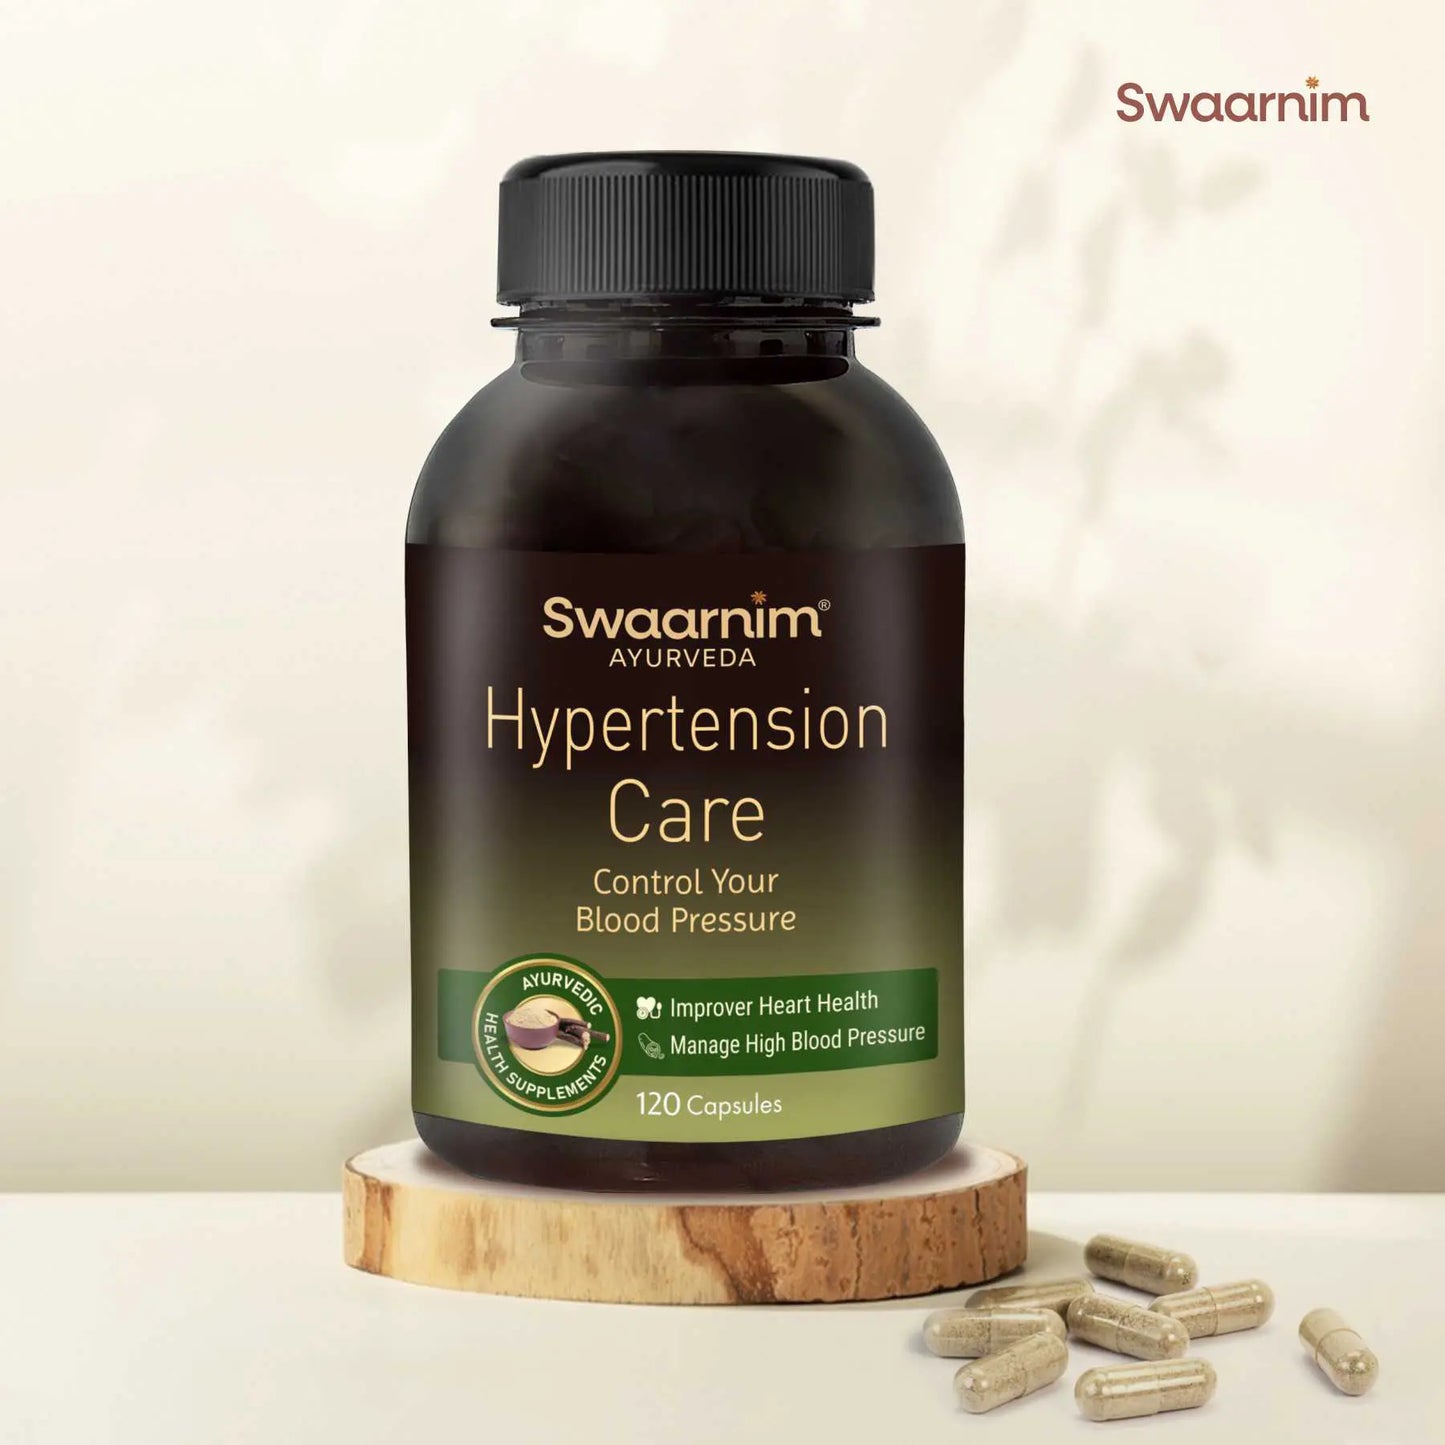 Swaarnim Hypertension Care